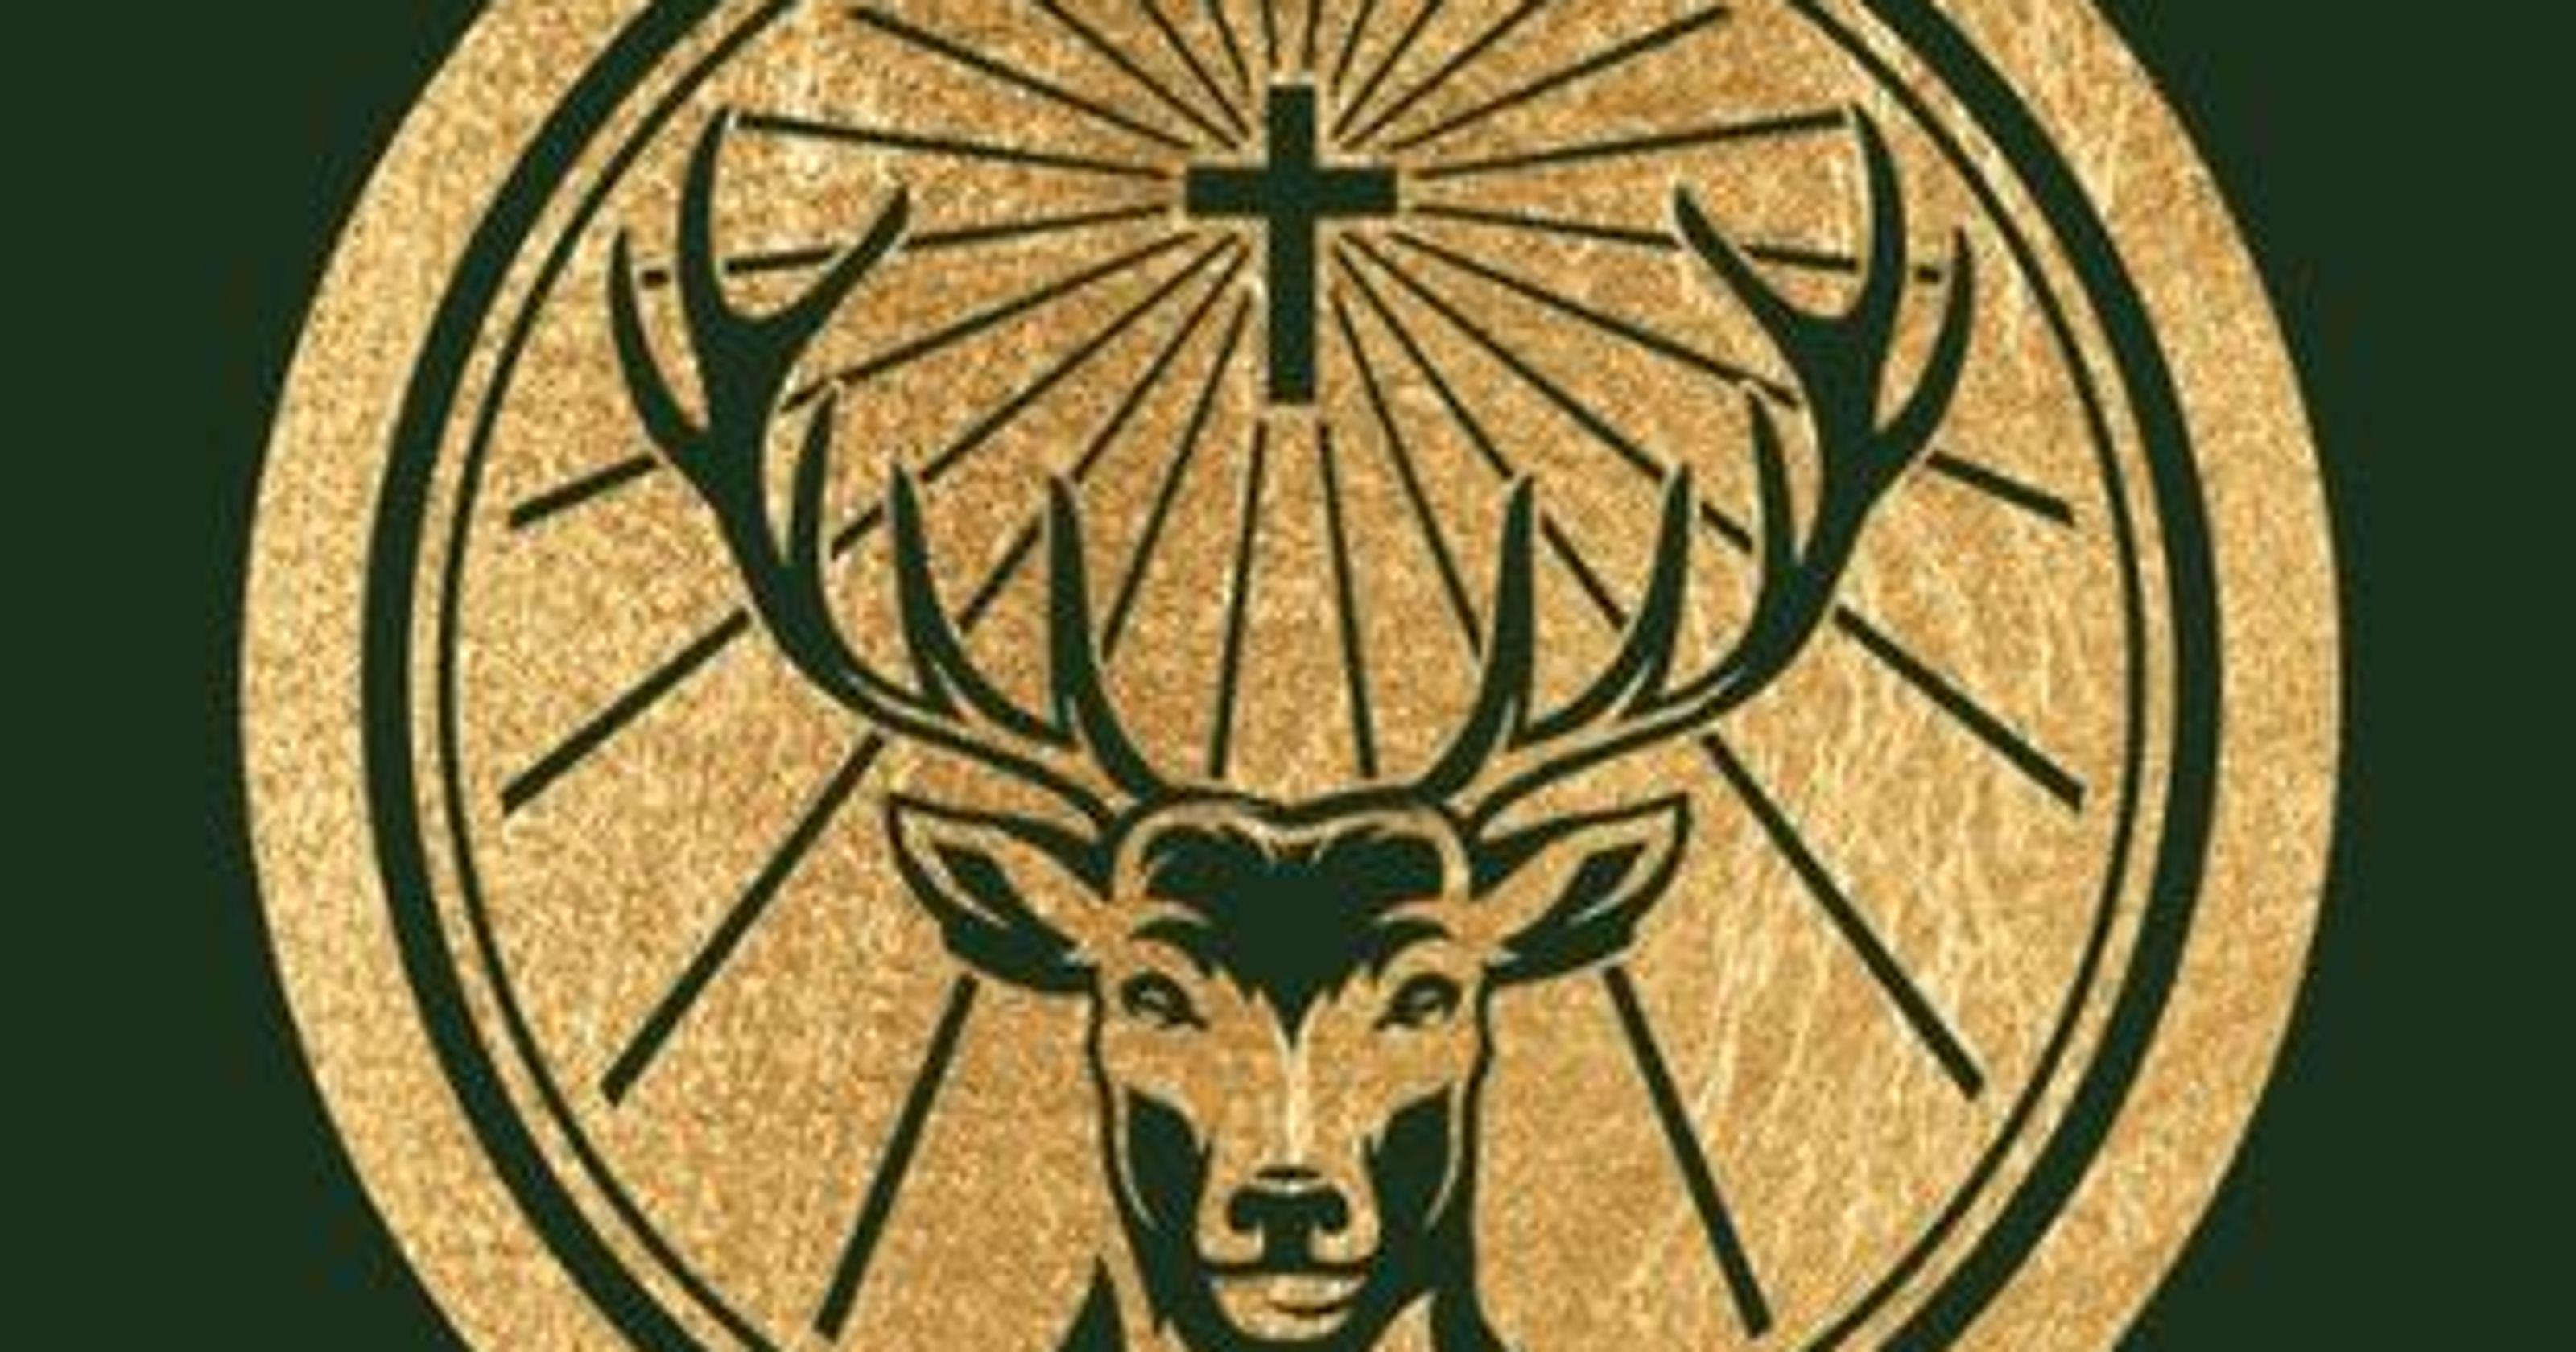 Jagermeister Logo - Putting fear in the deer? Jägermeister contests Bucks logo